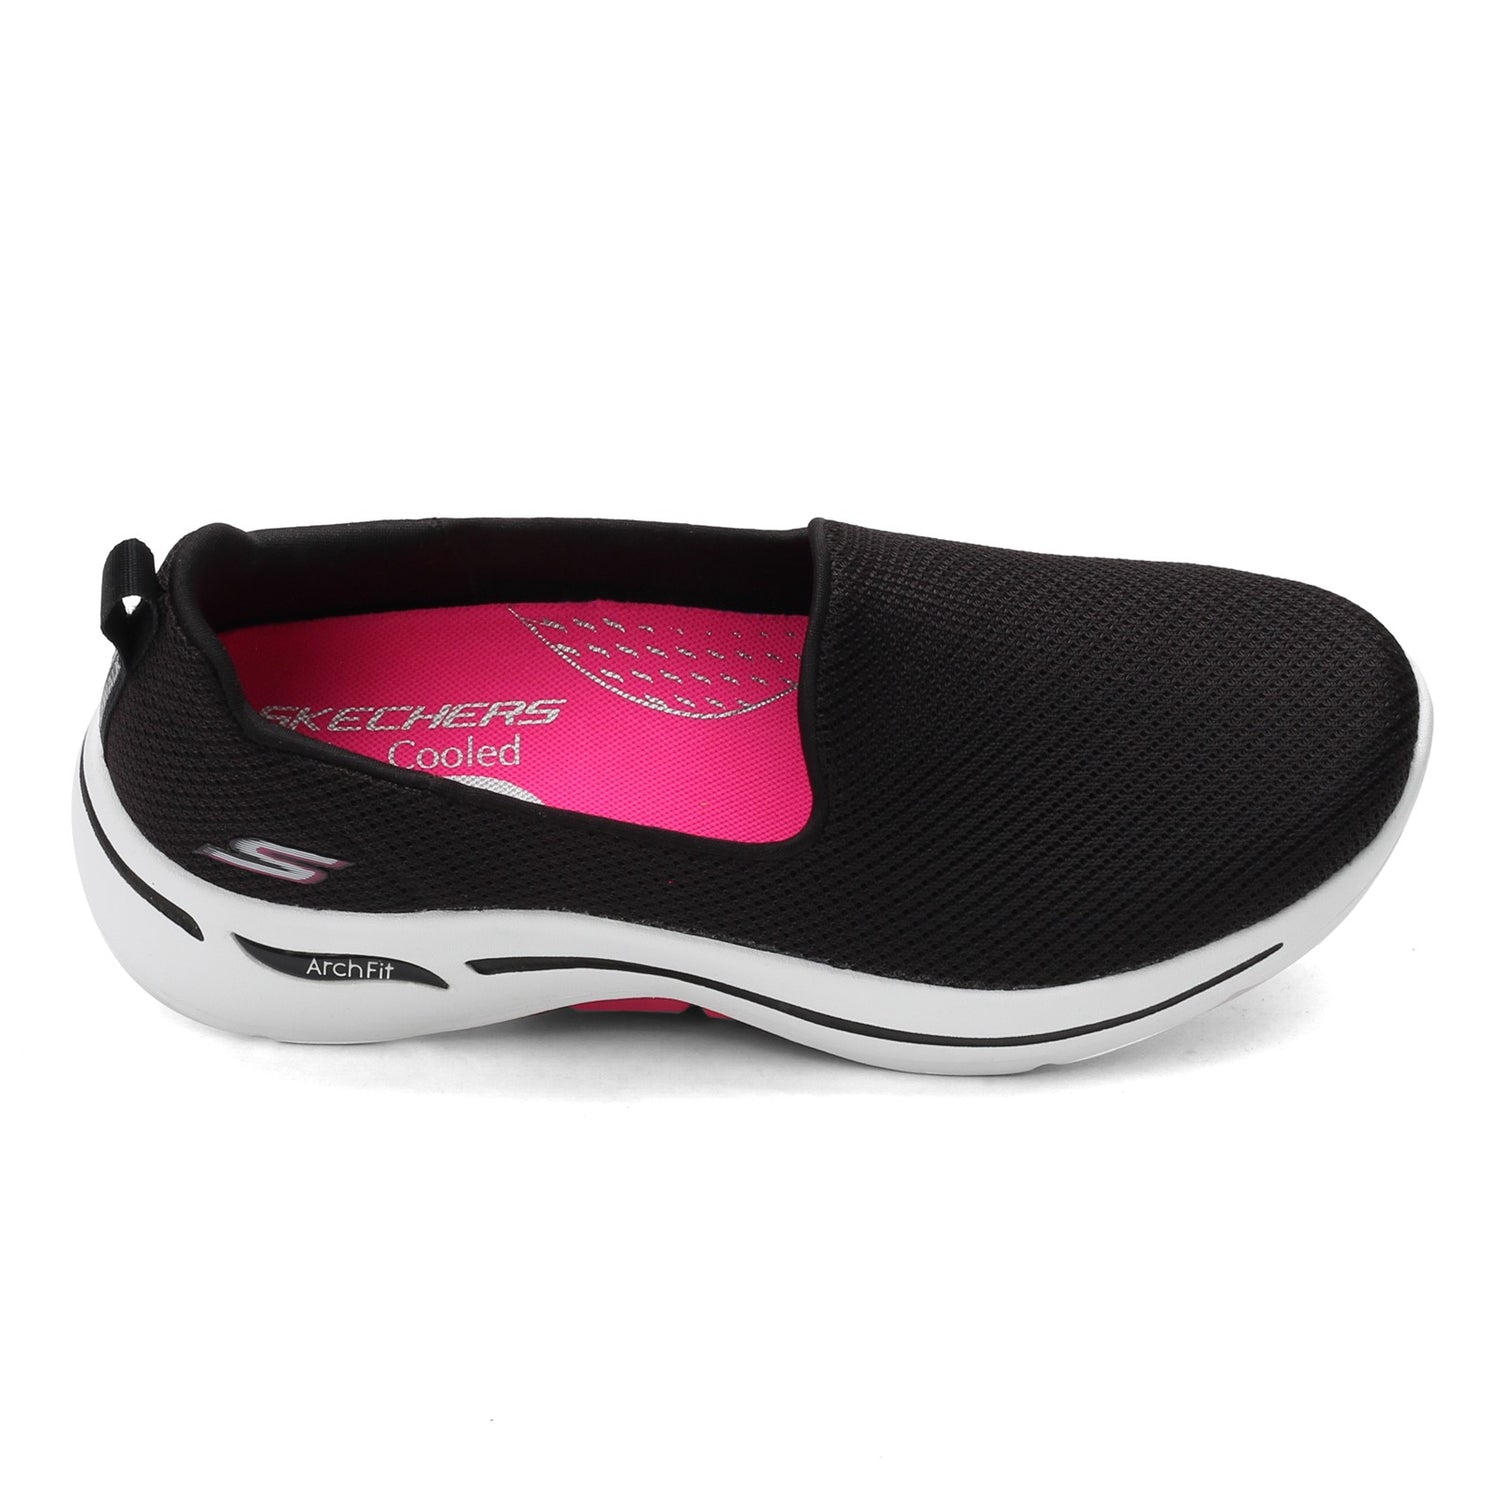 Peltz Shoes  Women's Skechers GOwalk Arch Fit - Grateful Slip-On BLACK / HOT PINK 124401-BKHP